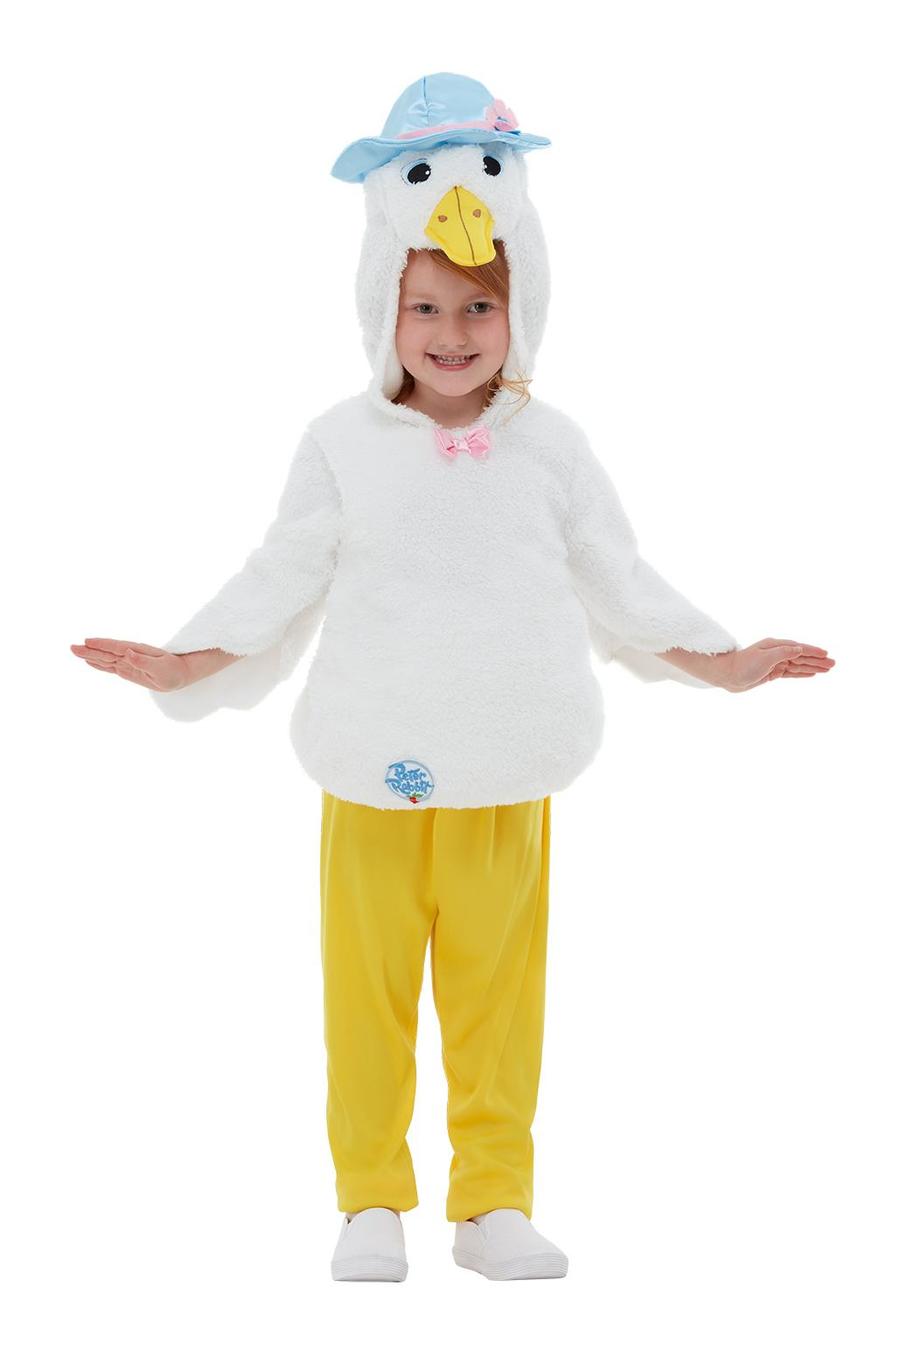 Peter Rabbit Deluxe Jemima Puddle-Duck Costume Wholesale